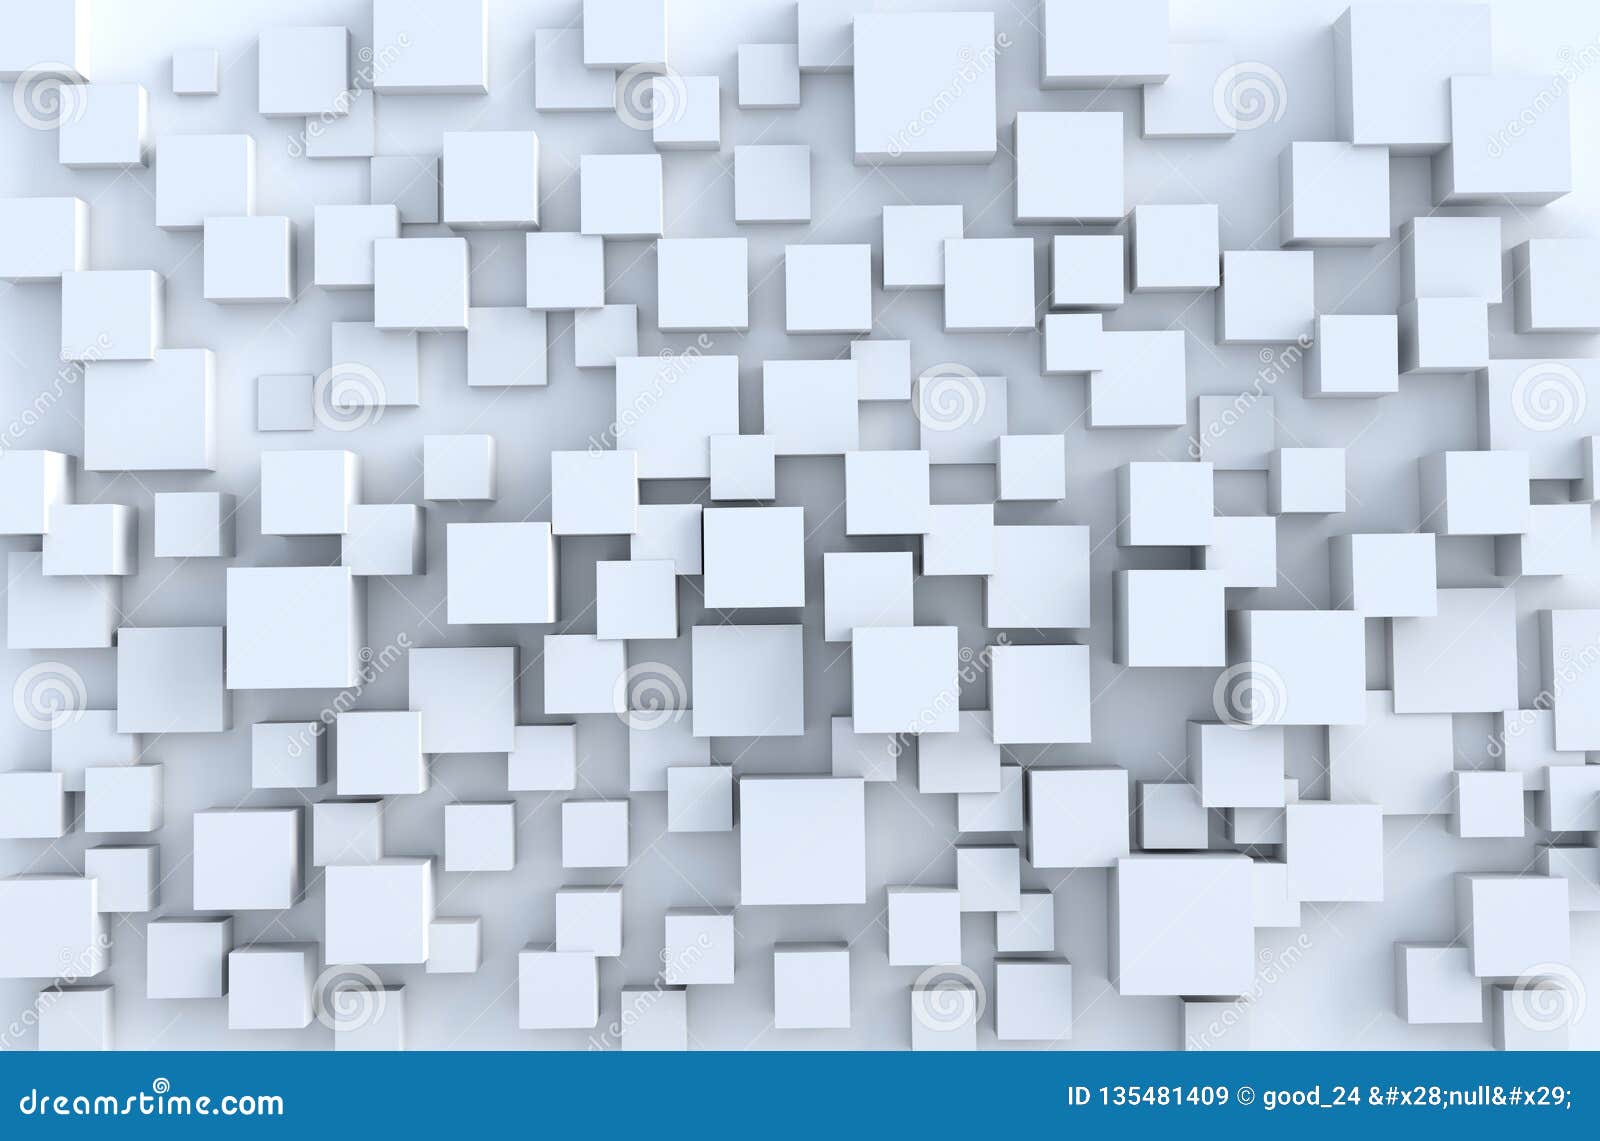 3d geometric shapes wallpaper white